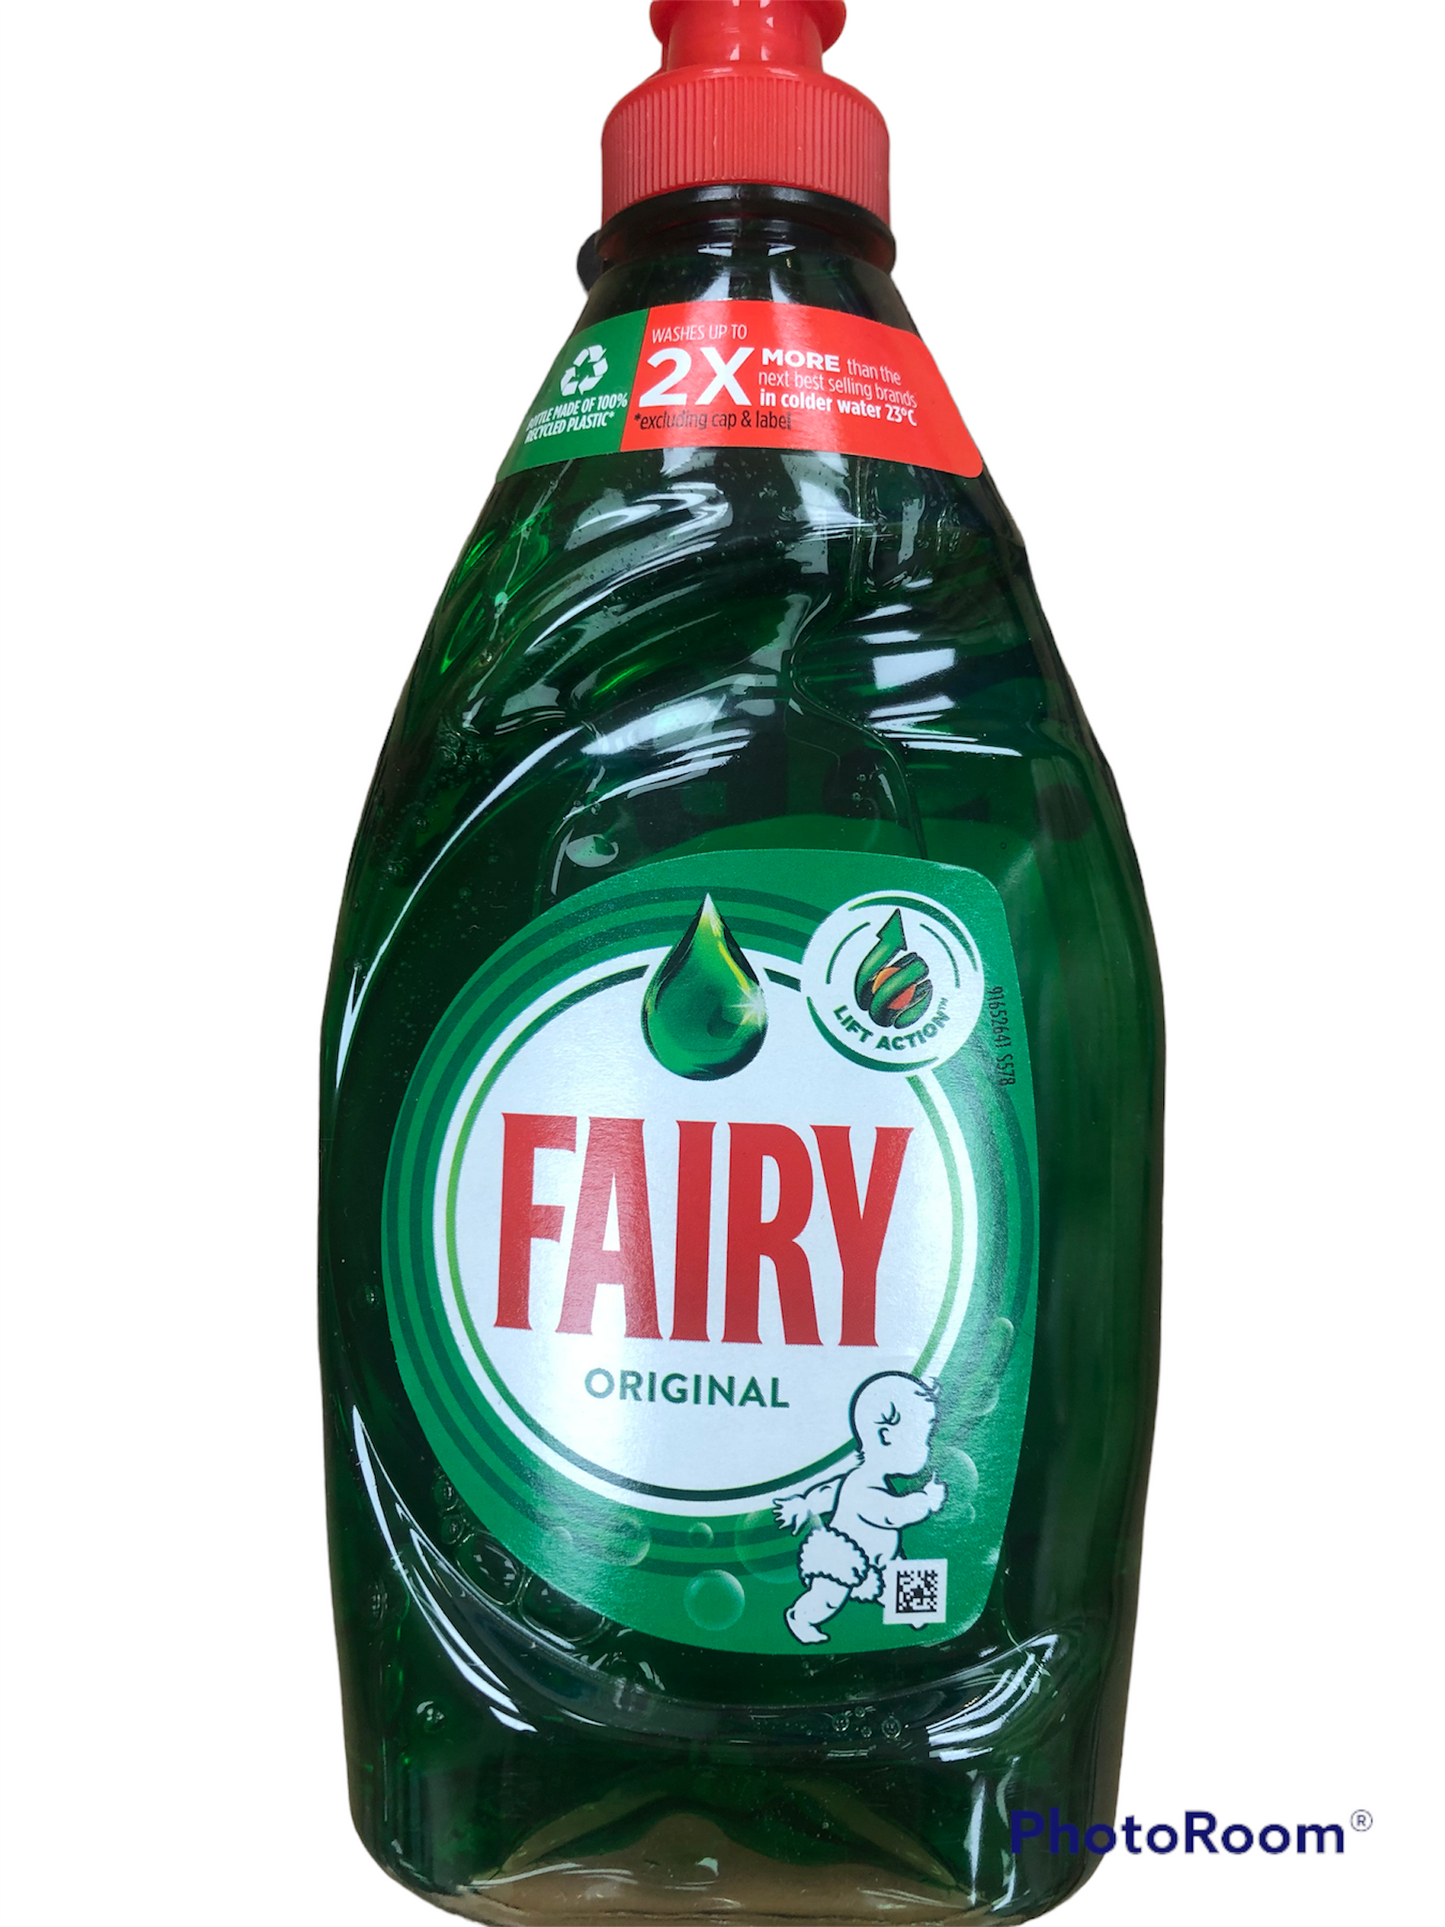 Fairy original washing up liquid 320ml